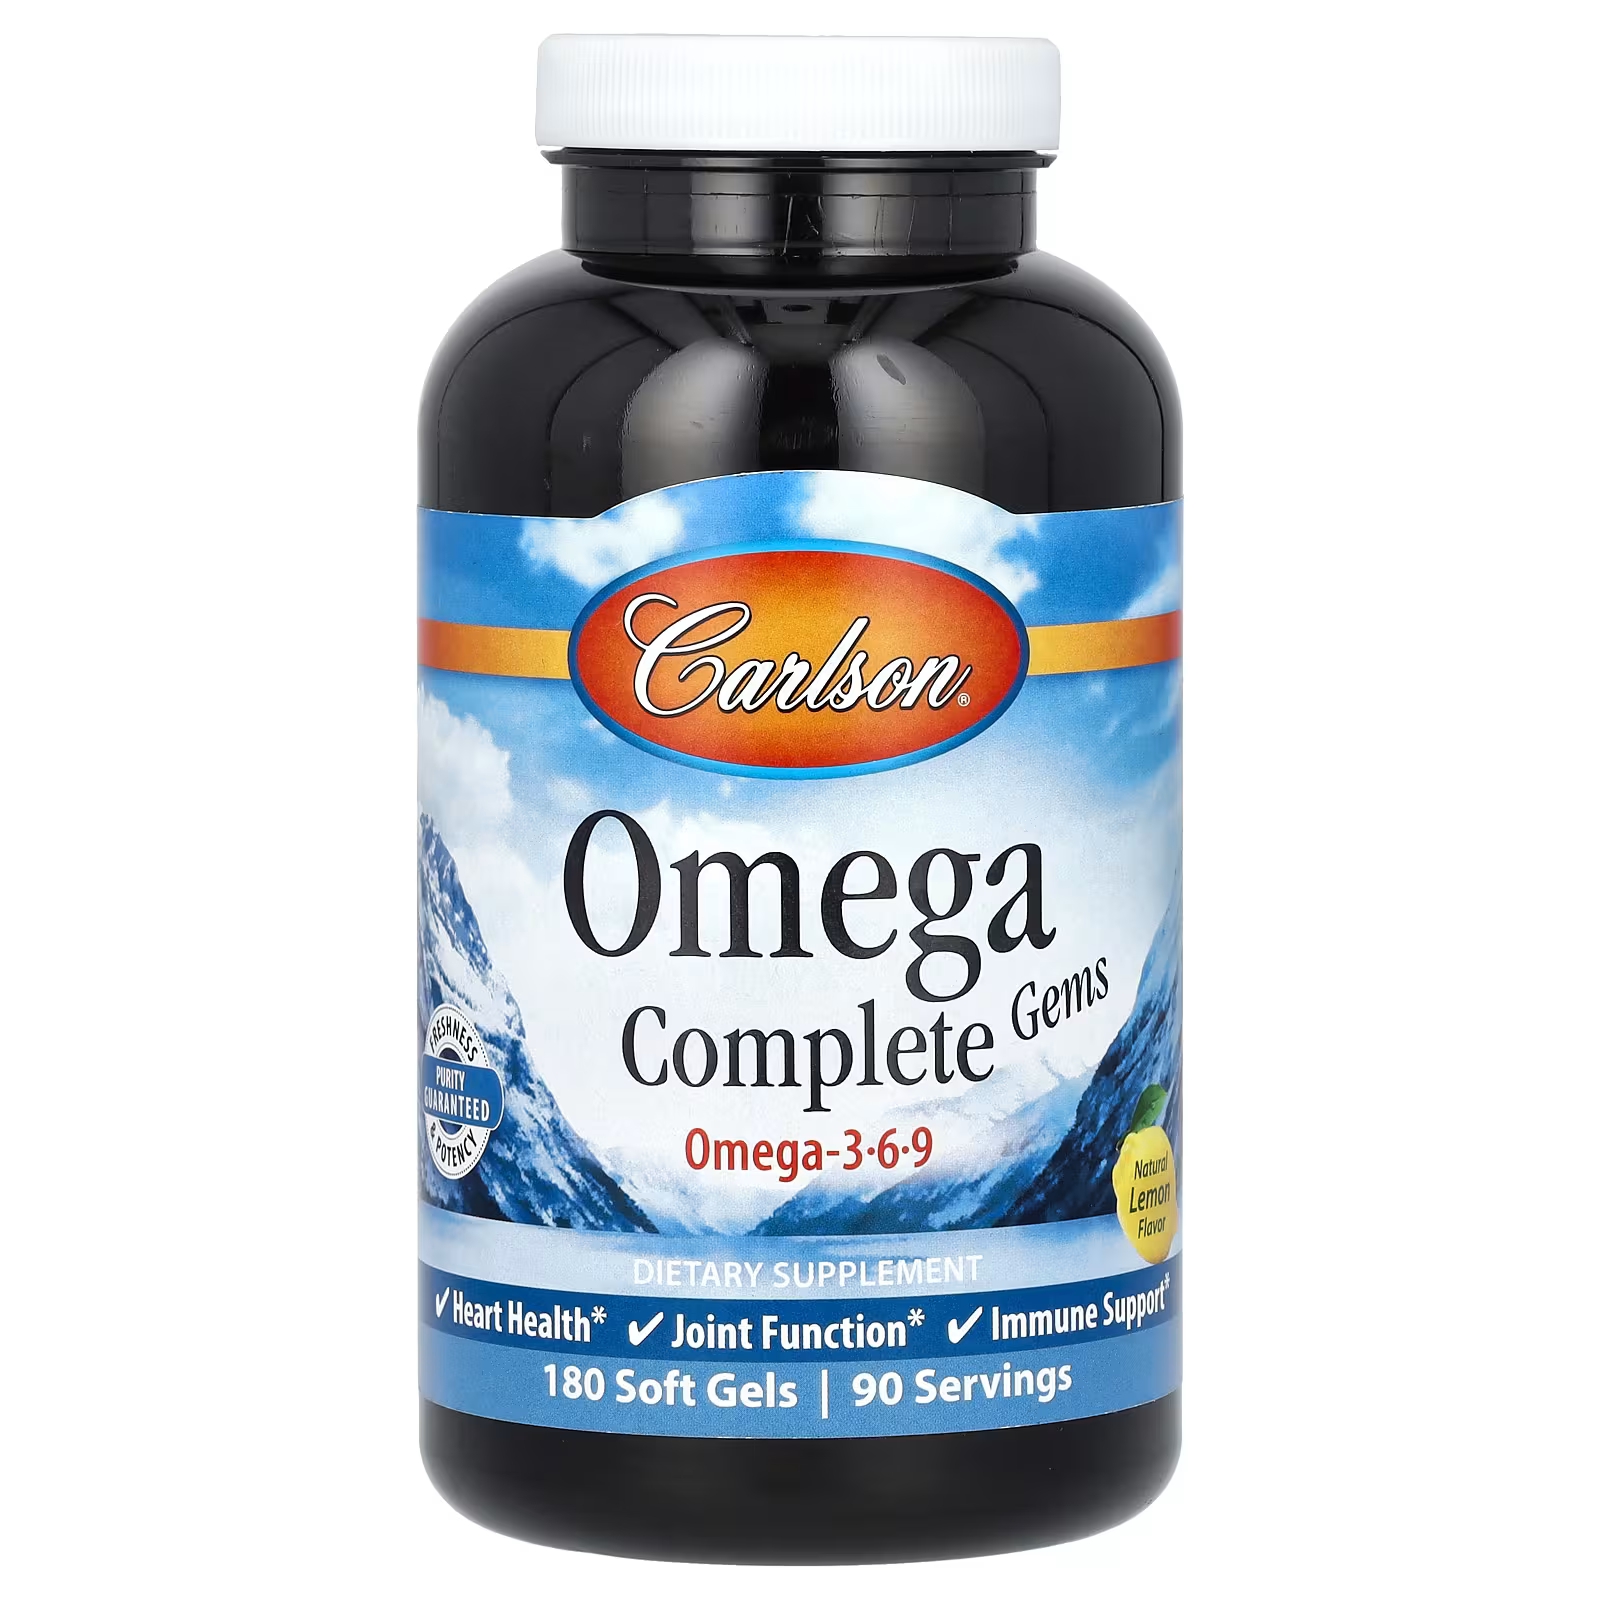 Carlson Omega Complete Gems Omega-3-6-9 Натуральный лимон 180 мягких таблеток carlson omega complete gems omega 3 6 9 натуральный лимон 180 мягких таблеток